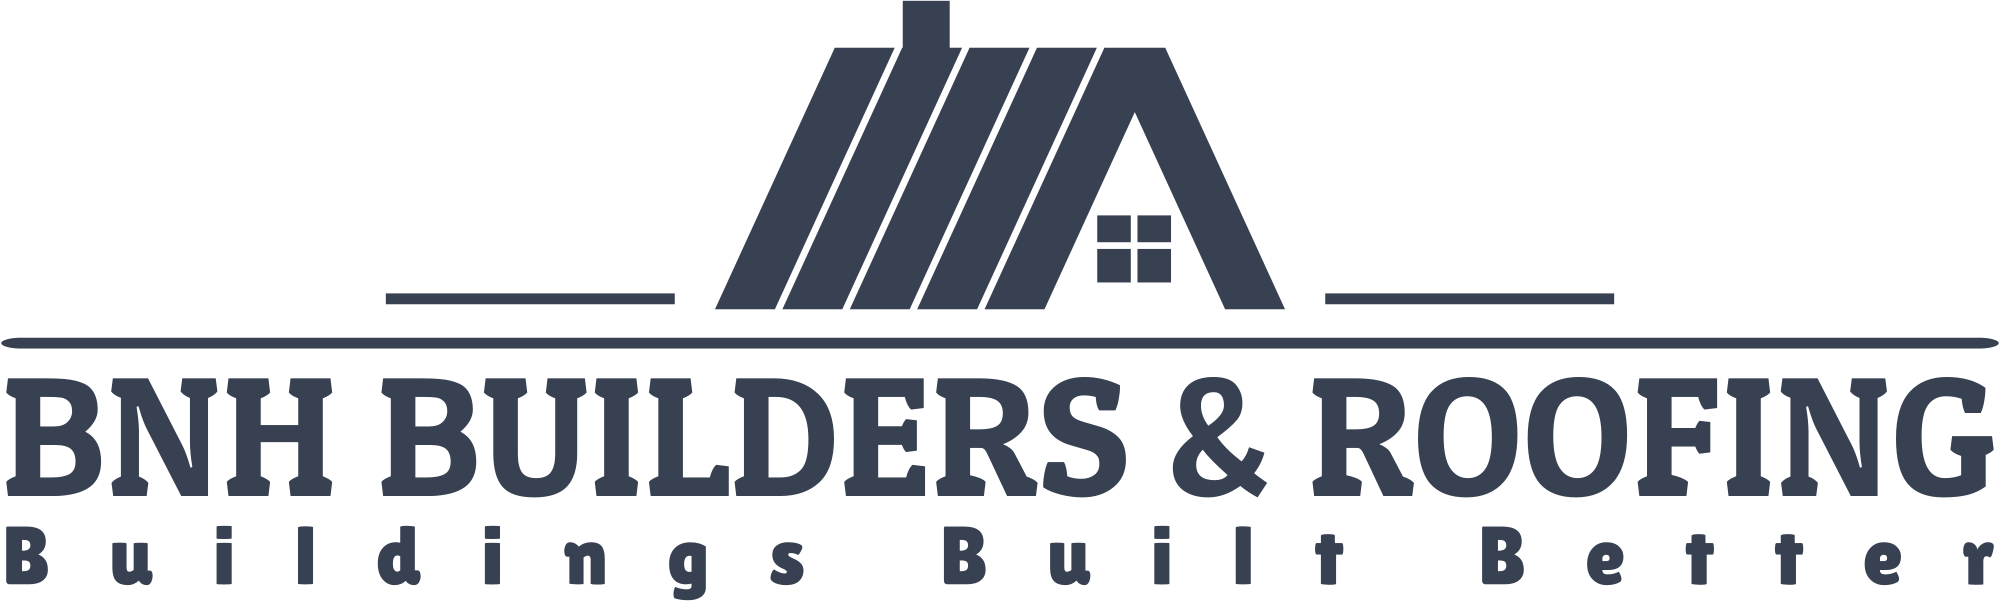 BNH Builders LLC 